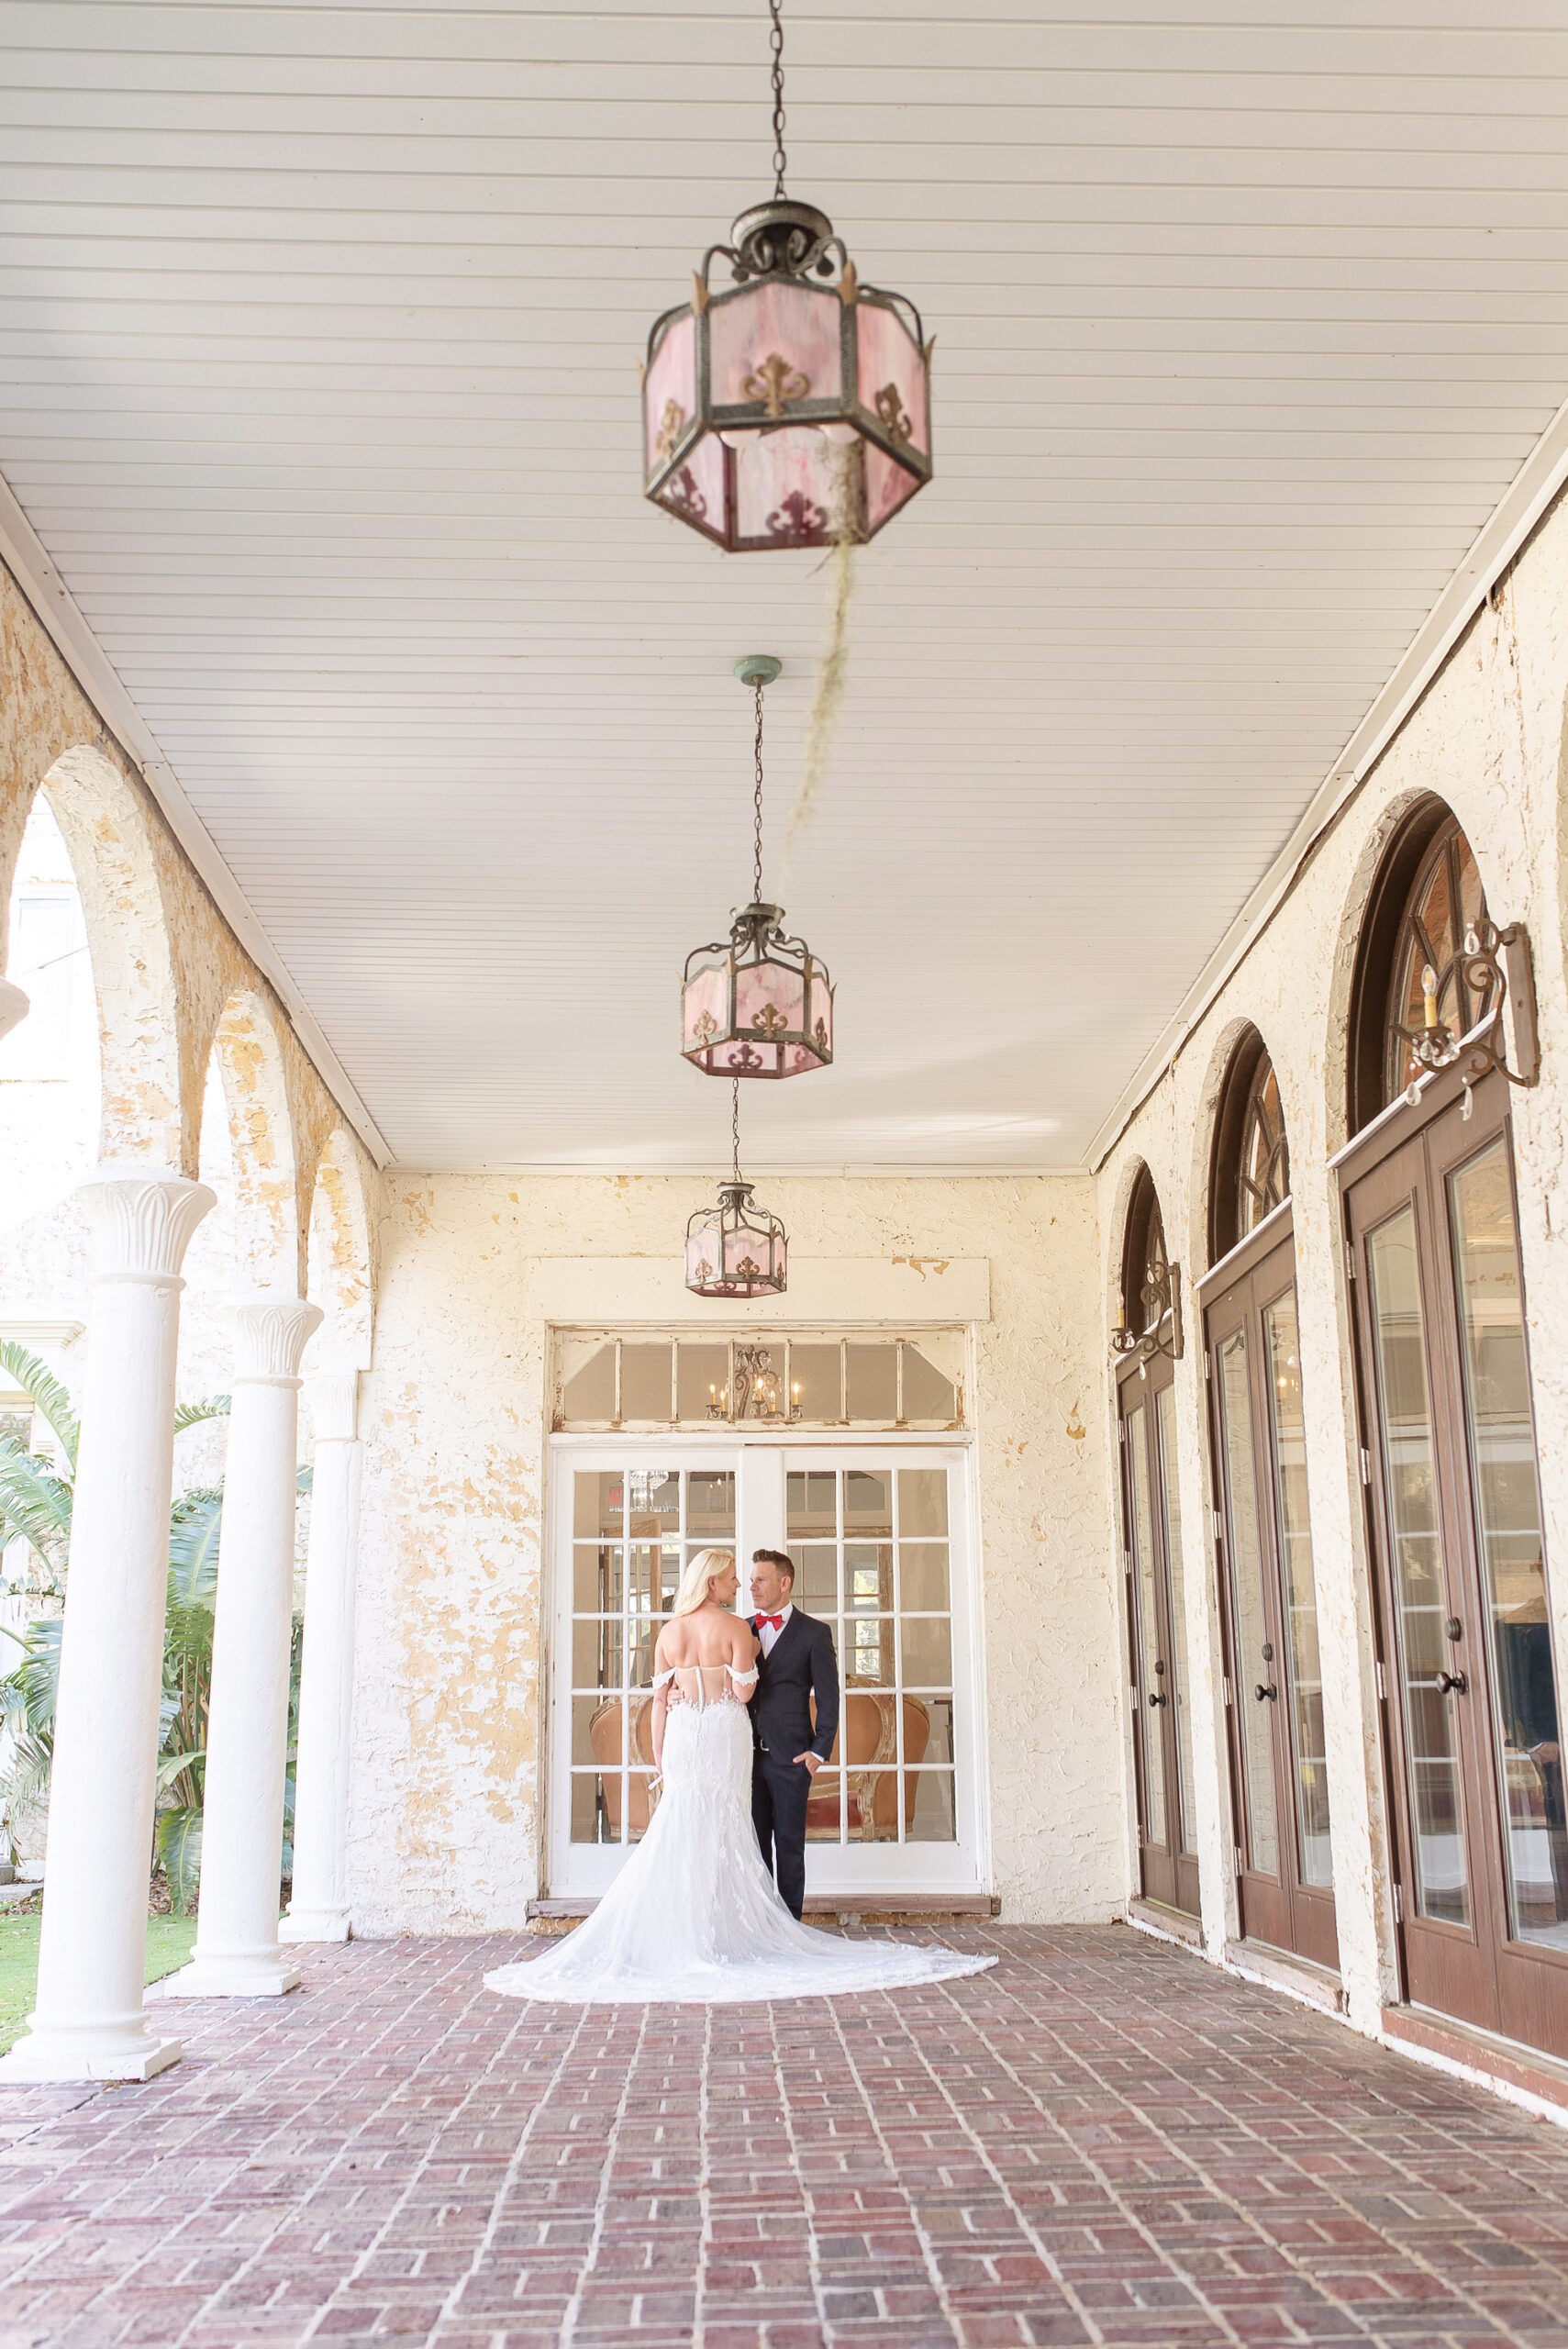 Italian Inspired Elegant Central Florida Wedding Venue Bella Cosa | Photographer Kristen Marie Photography